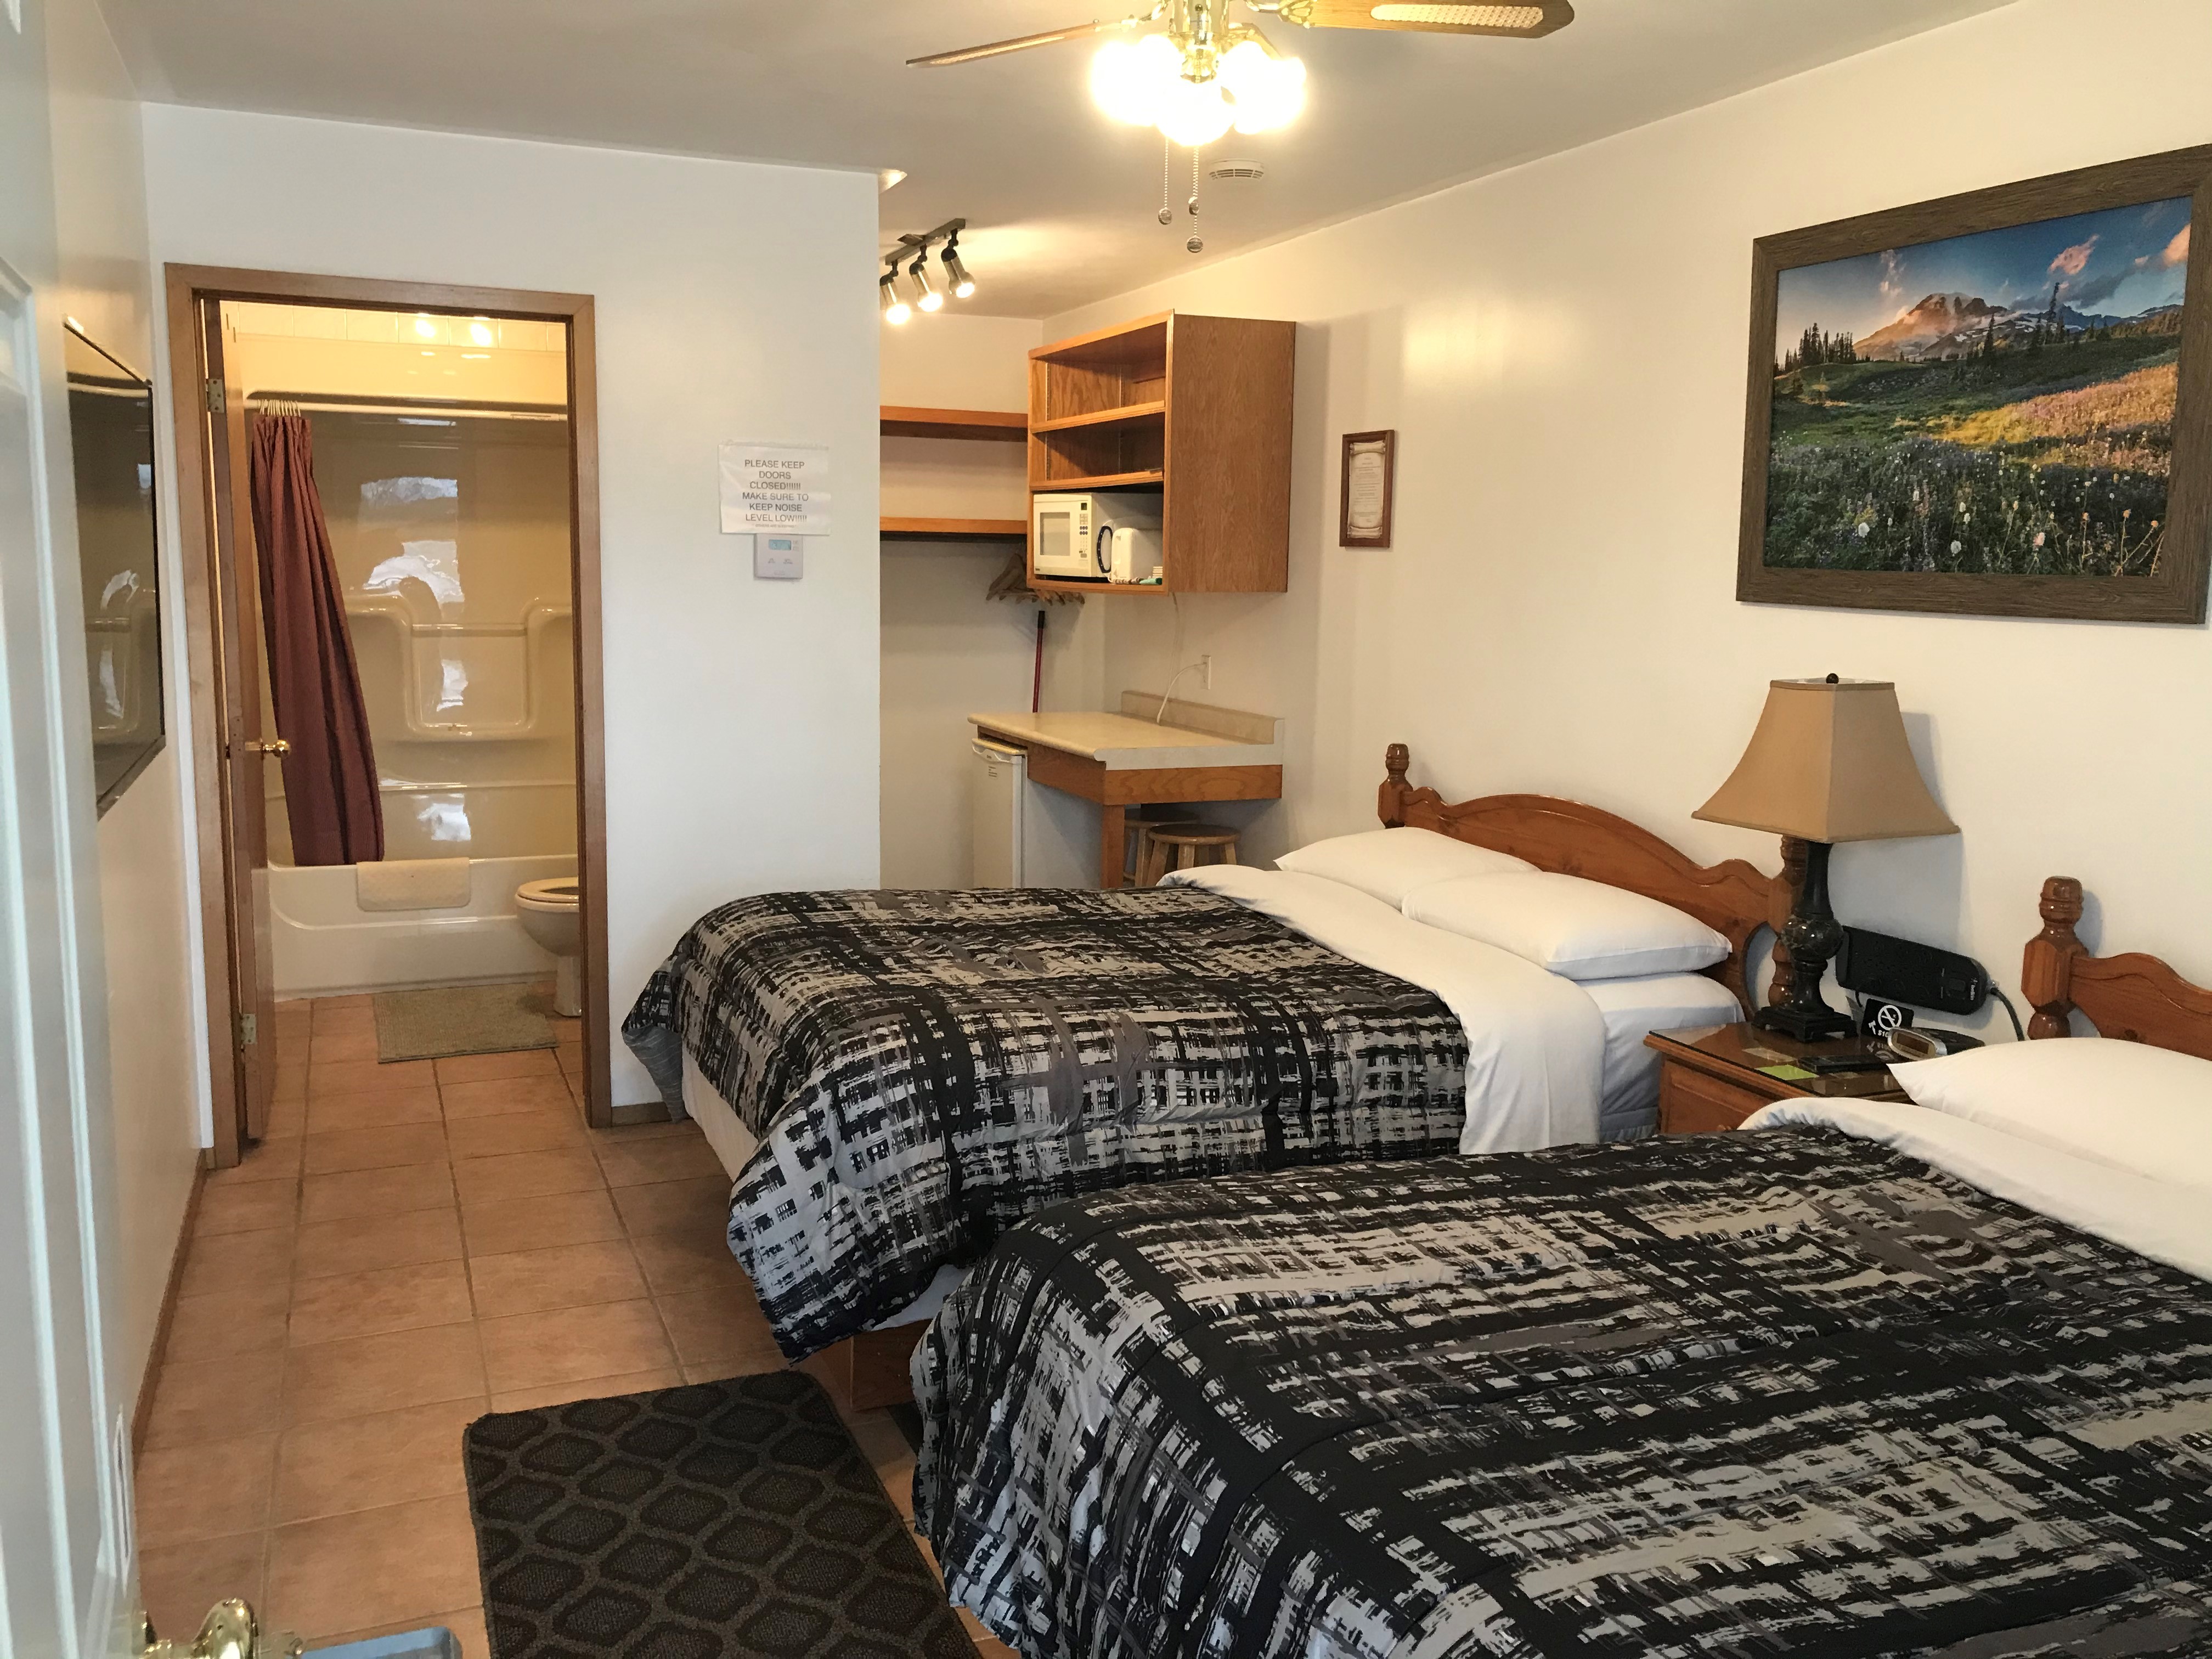 https://0901.nccdn.net/4_2/000/000/024/ec9/jays-motel-room-with-2-beds.jpg